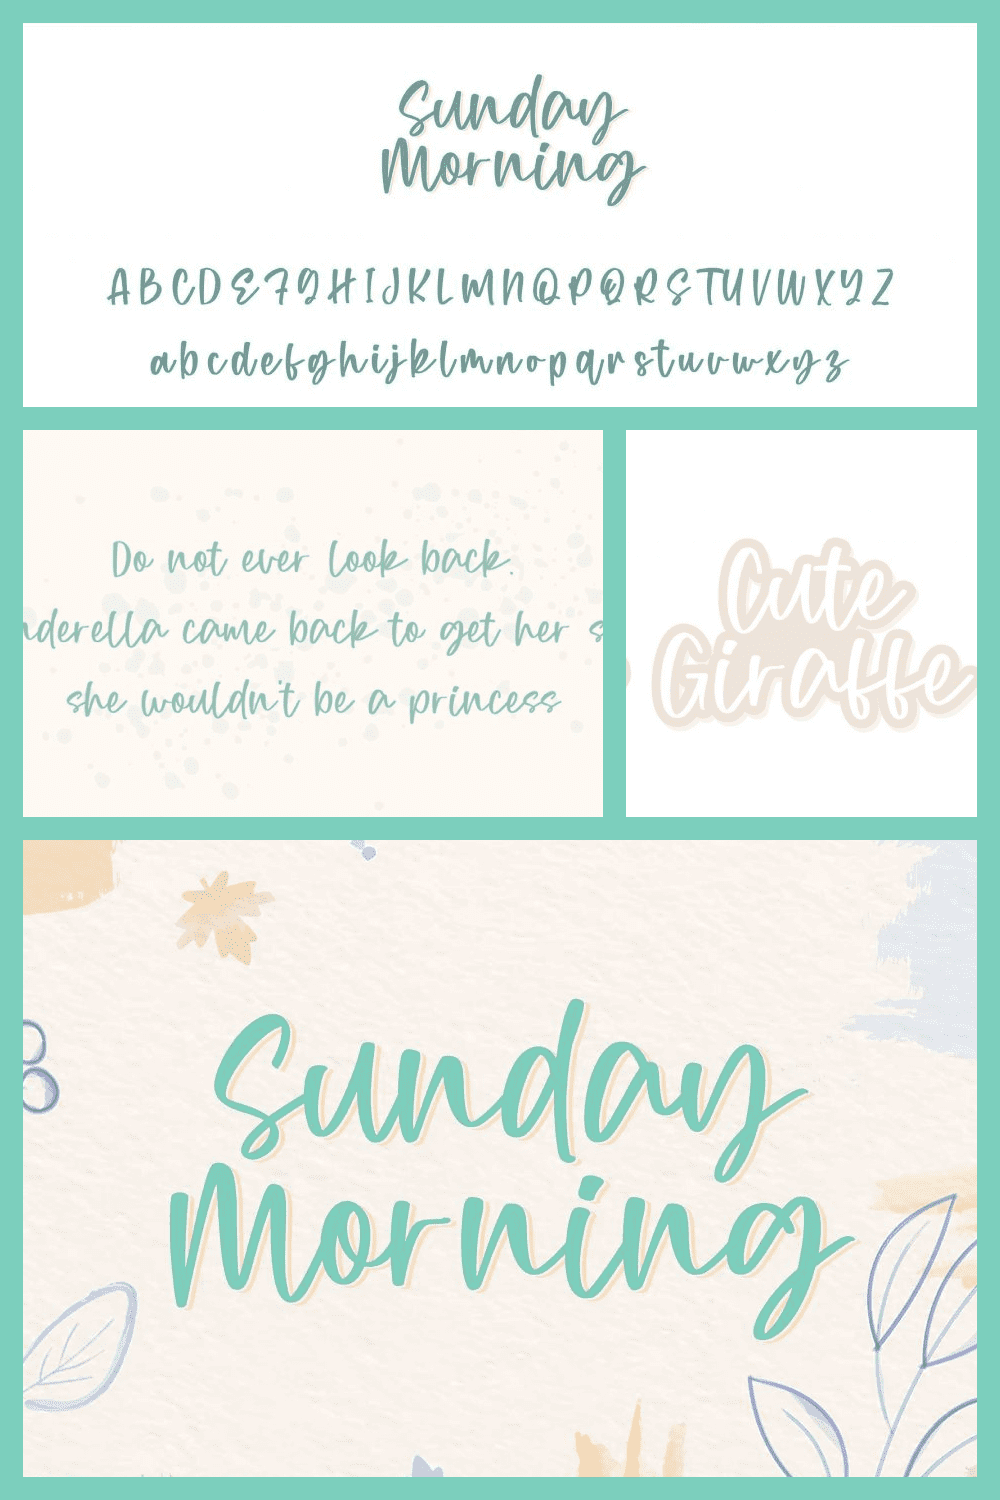 Sunday Morning - A Handwritten Script Font - MasterBundles - Pinterest Collage Image.